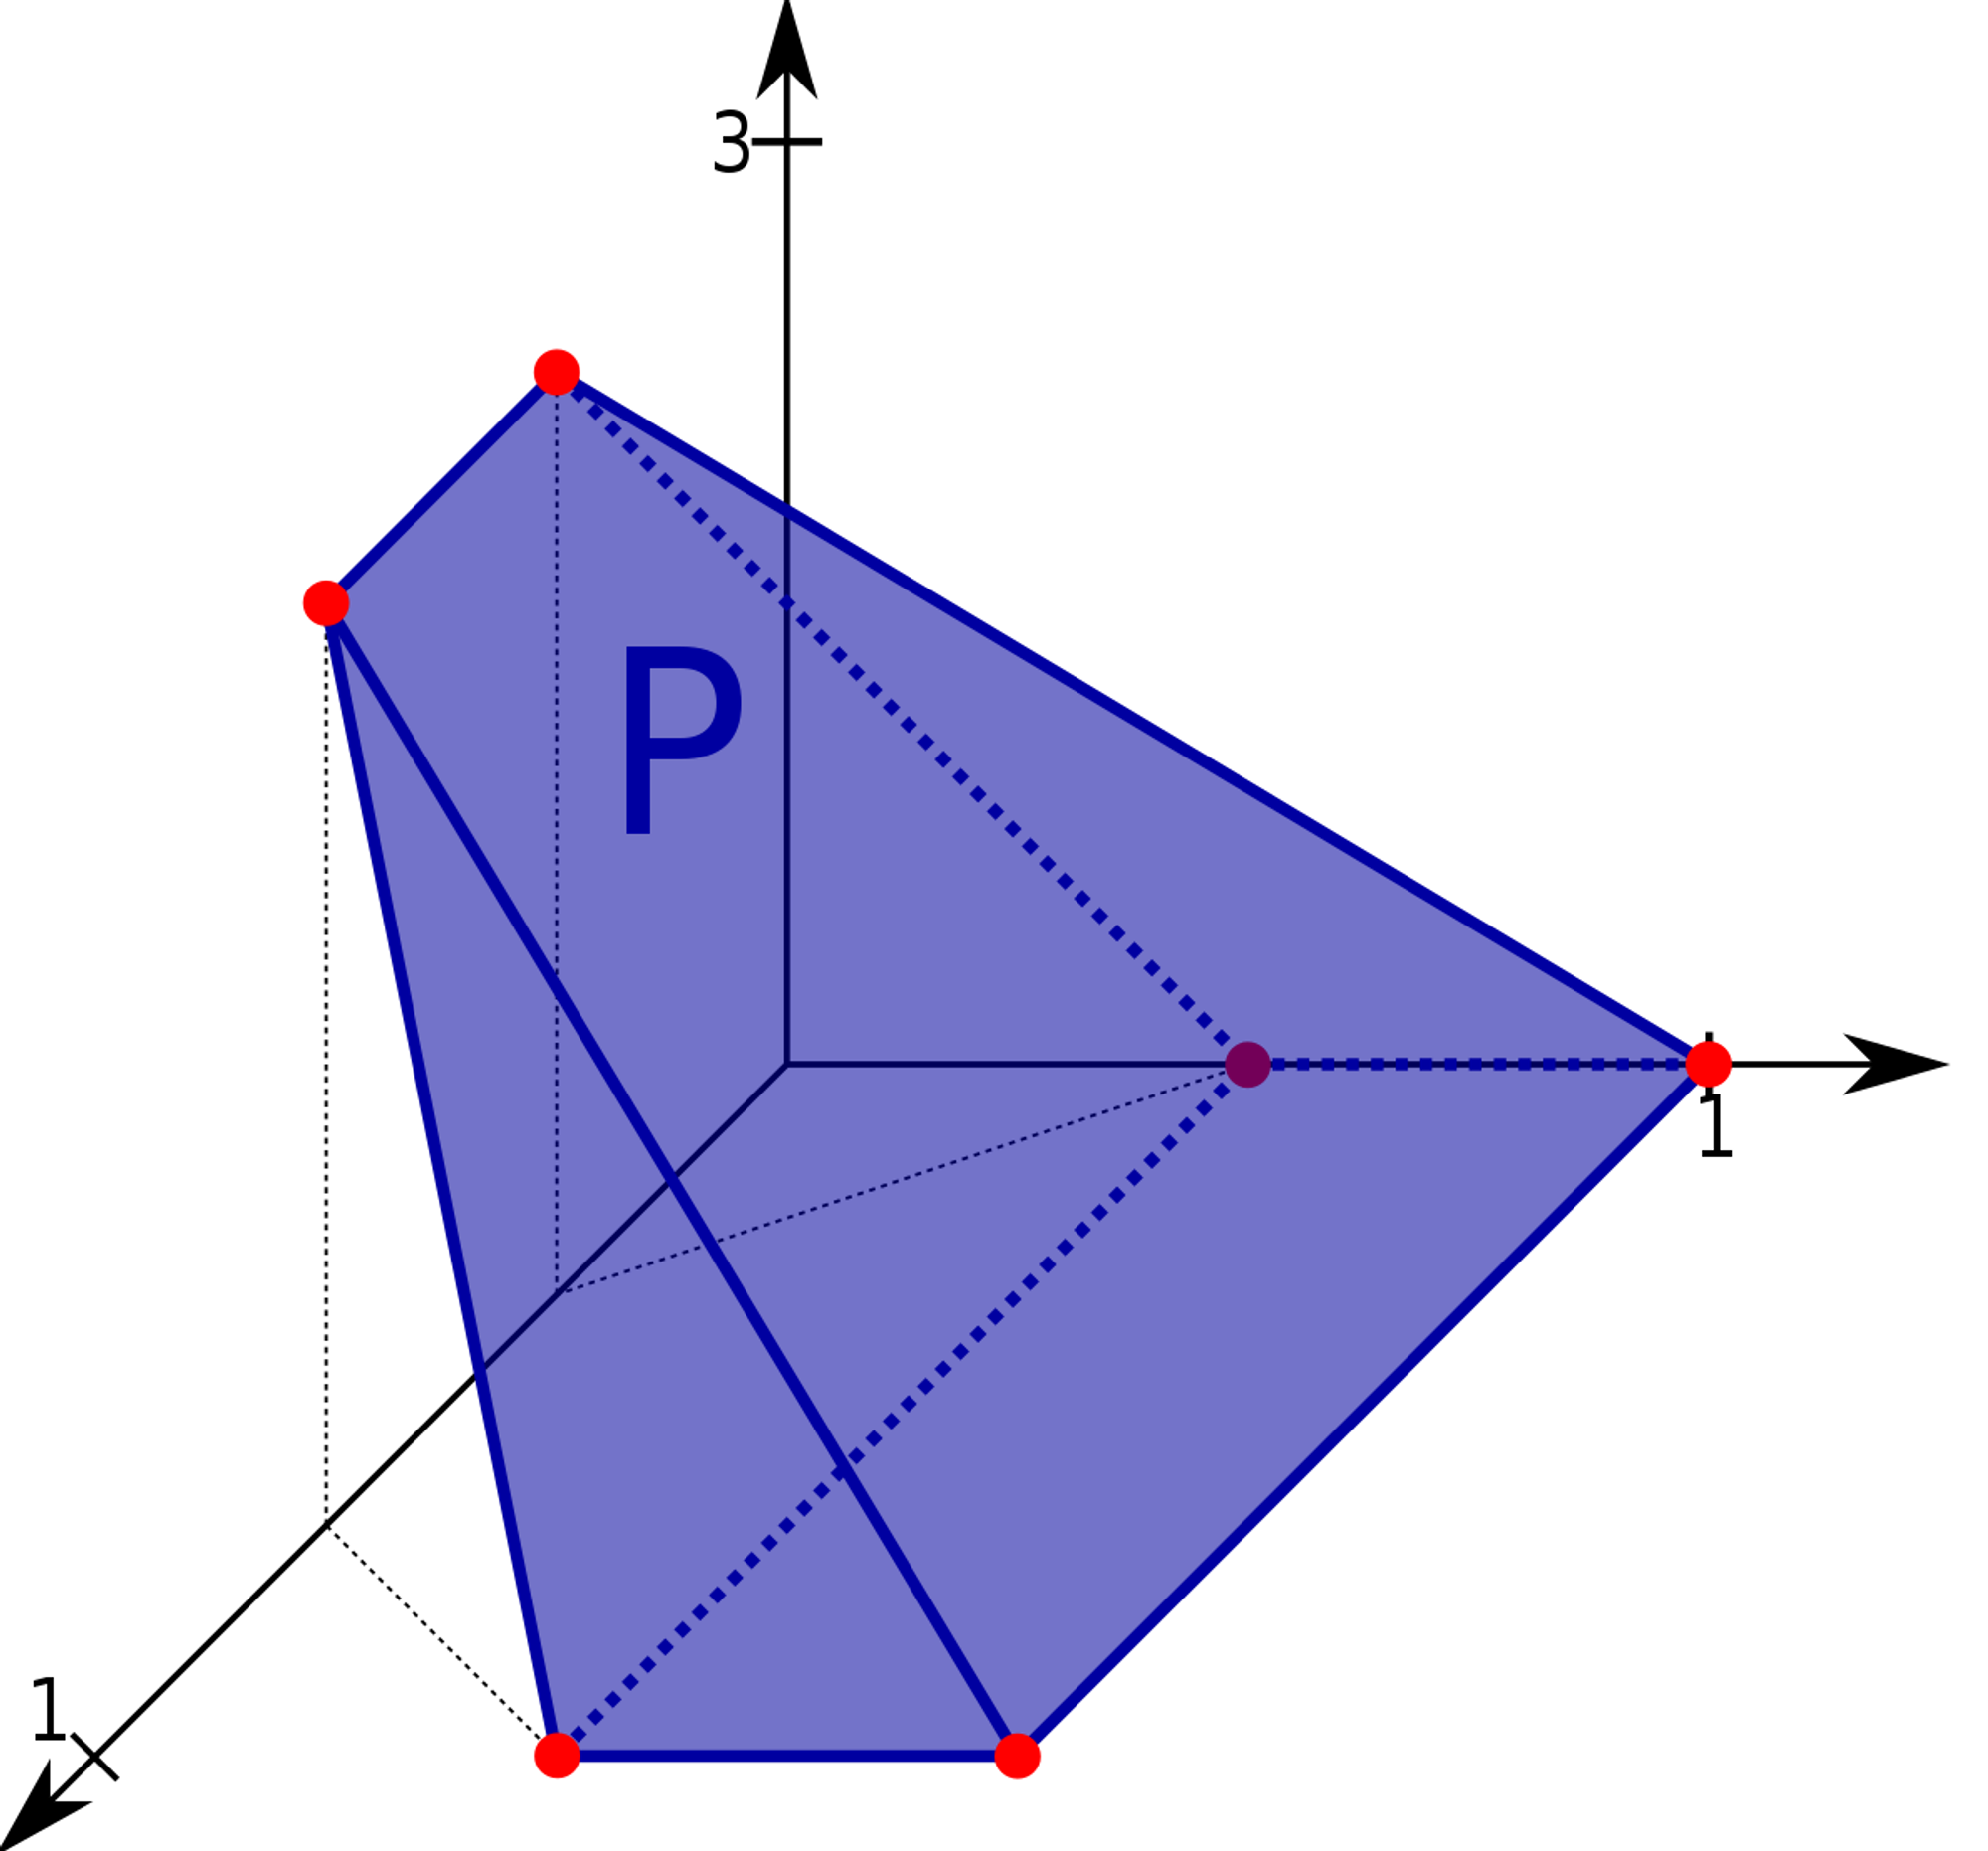 Convex polytope